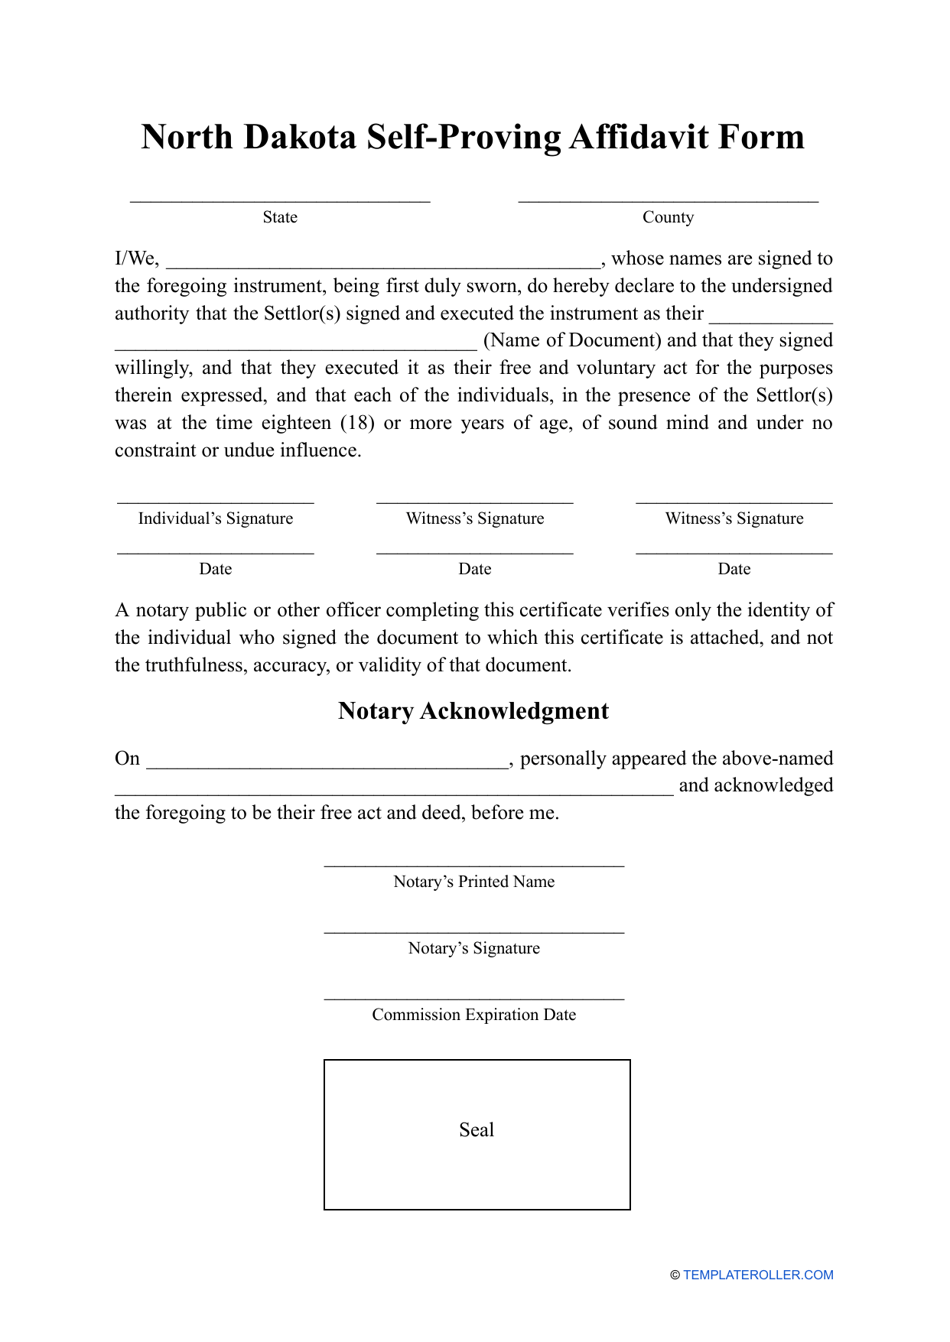 Self-proving Affidavit Form - North Dakota, Page 1